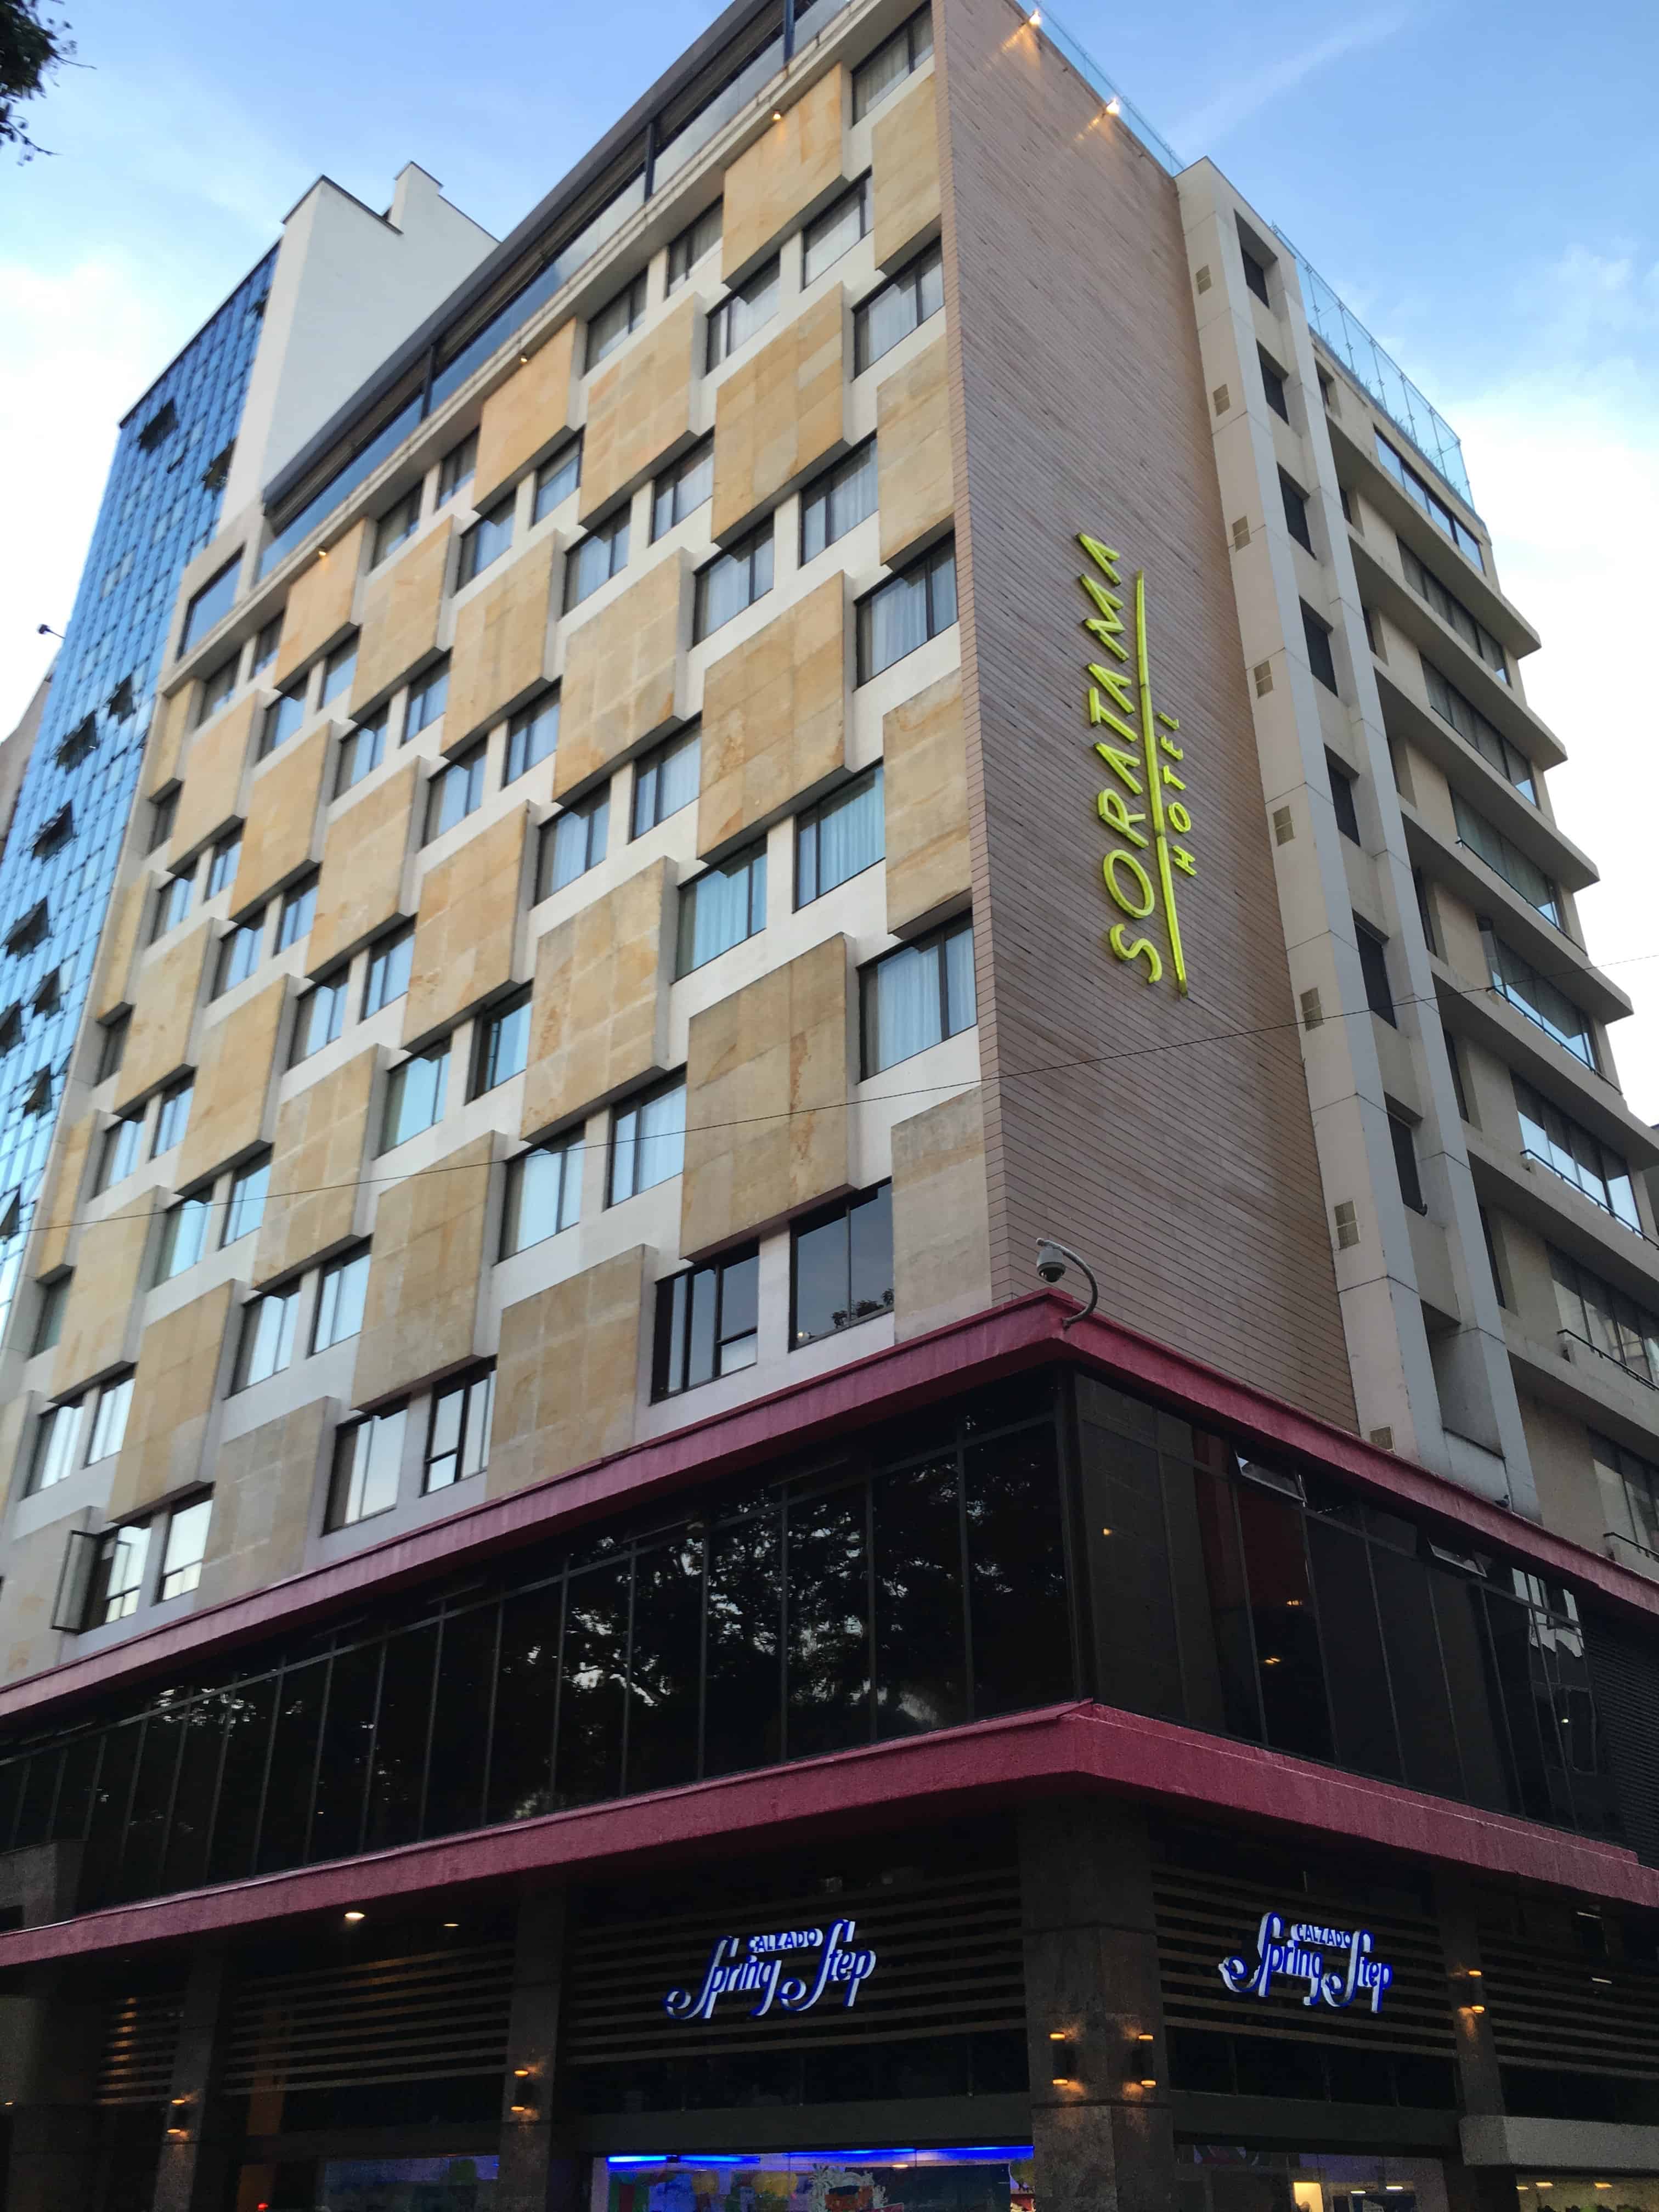 Hotel Soratama in Pereira, Risaralda, Colombia